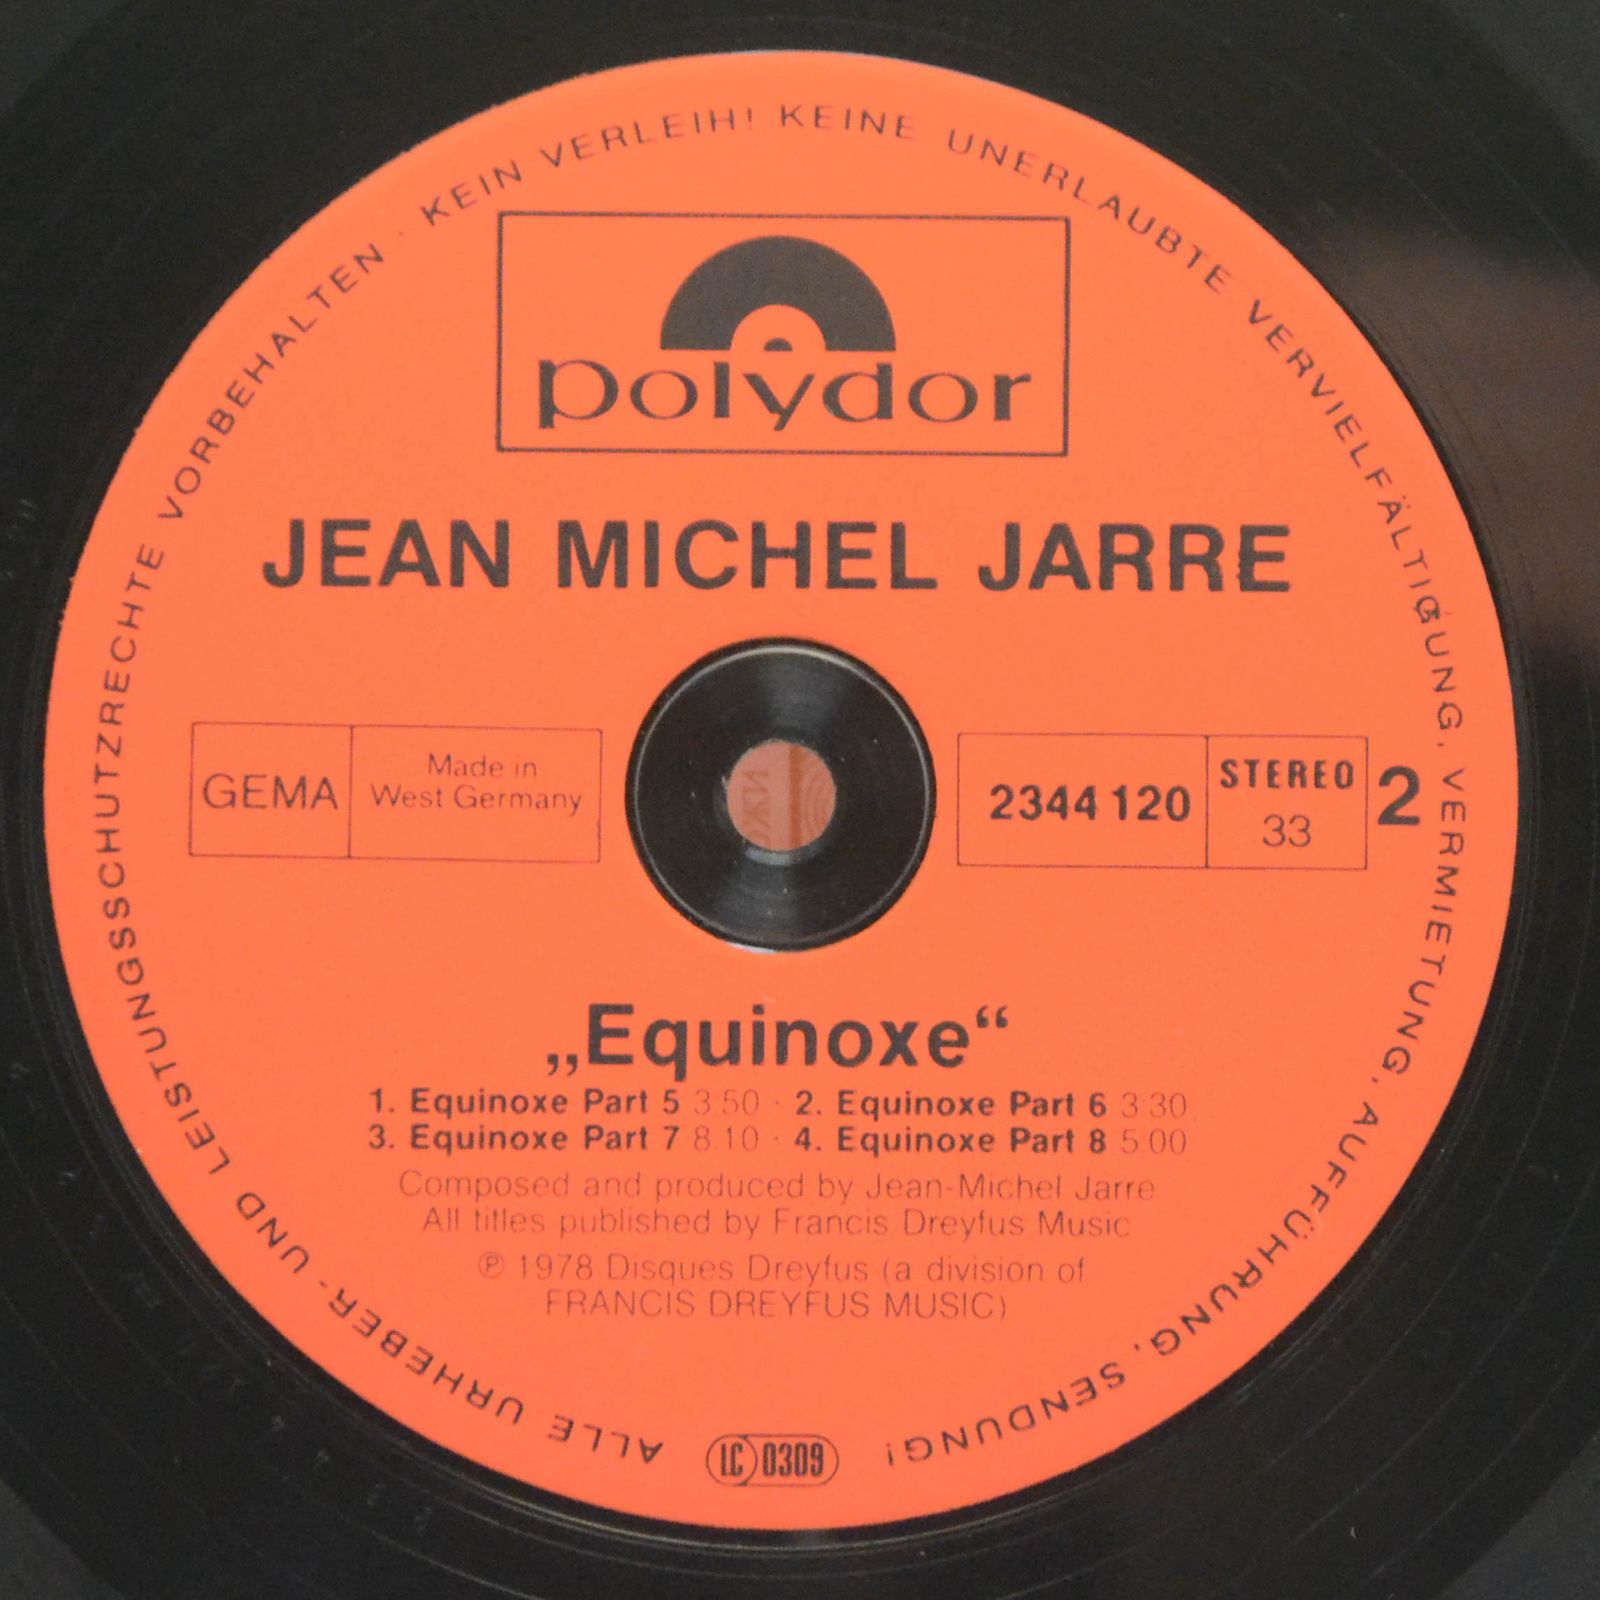 Jean Michel Jarre — Equinoxe, 1978